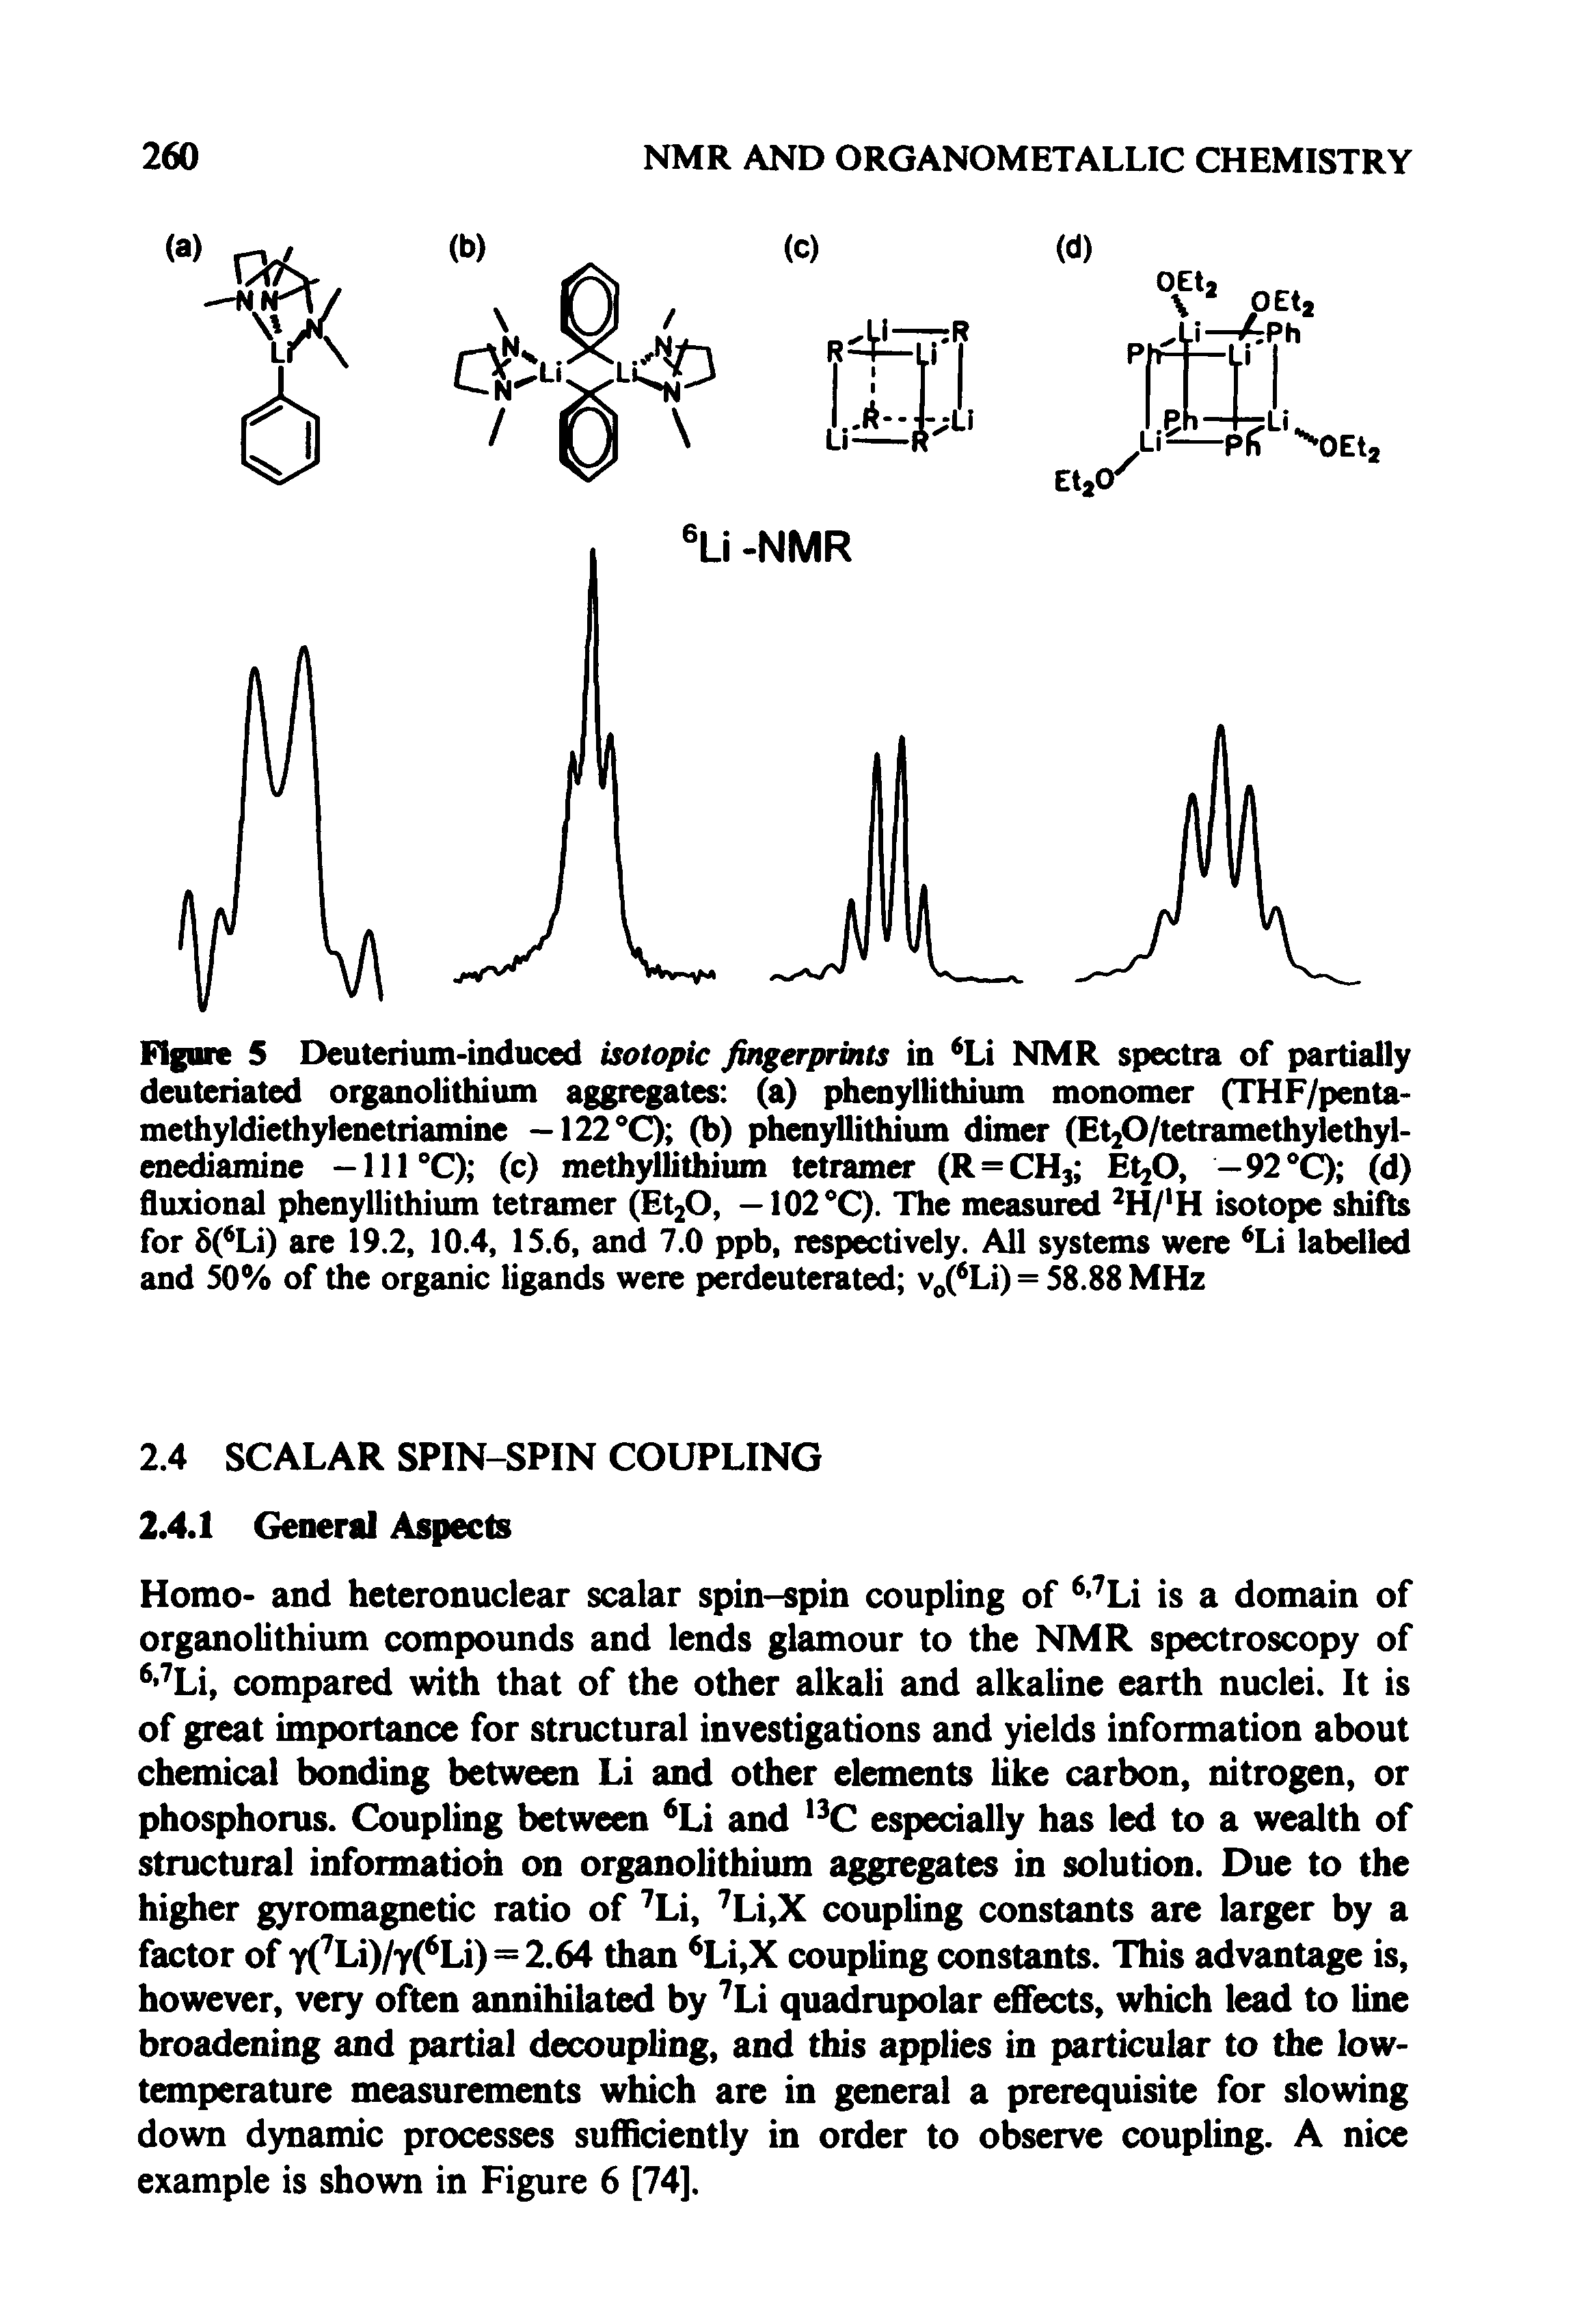 Figure 5 Deuterium-induced isotopic fingerprints in Li NMR spectra of partially deuteriated organolithium aggregates (a) phenyllithium monomer (THF/penta-methyldiethylenetriamine — 122°Q (b) phenyllithium dimer (Et20/tetramethylethyl-enediamine -111°C) (c) methylhthium tetramer (R=CHj EtjO, — 92 Q (d) fluxional phenyllithium tetramer (Et20, — 102 C). The measu H/ H isotope shifts for 5( Li) are 19.2, 10.4, 15.6, and 7.0 ppb, respectively. All systems were Li labelled and 50% of the organic ligands were perdeuterated v C Li) = 58.88 MHz...